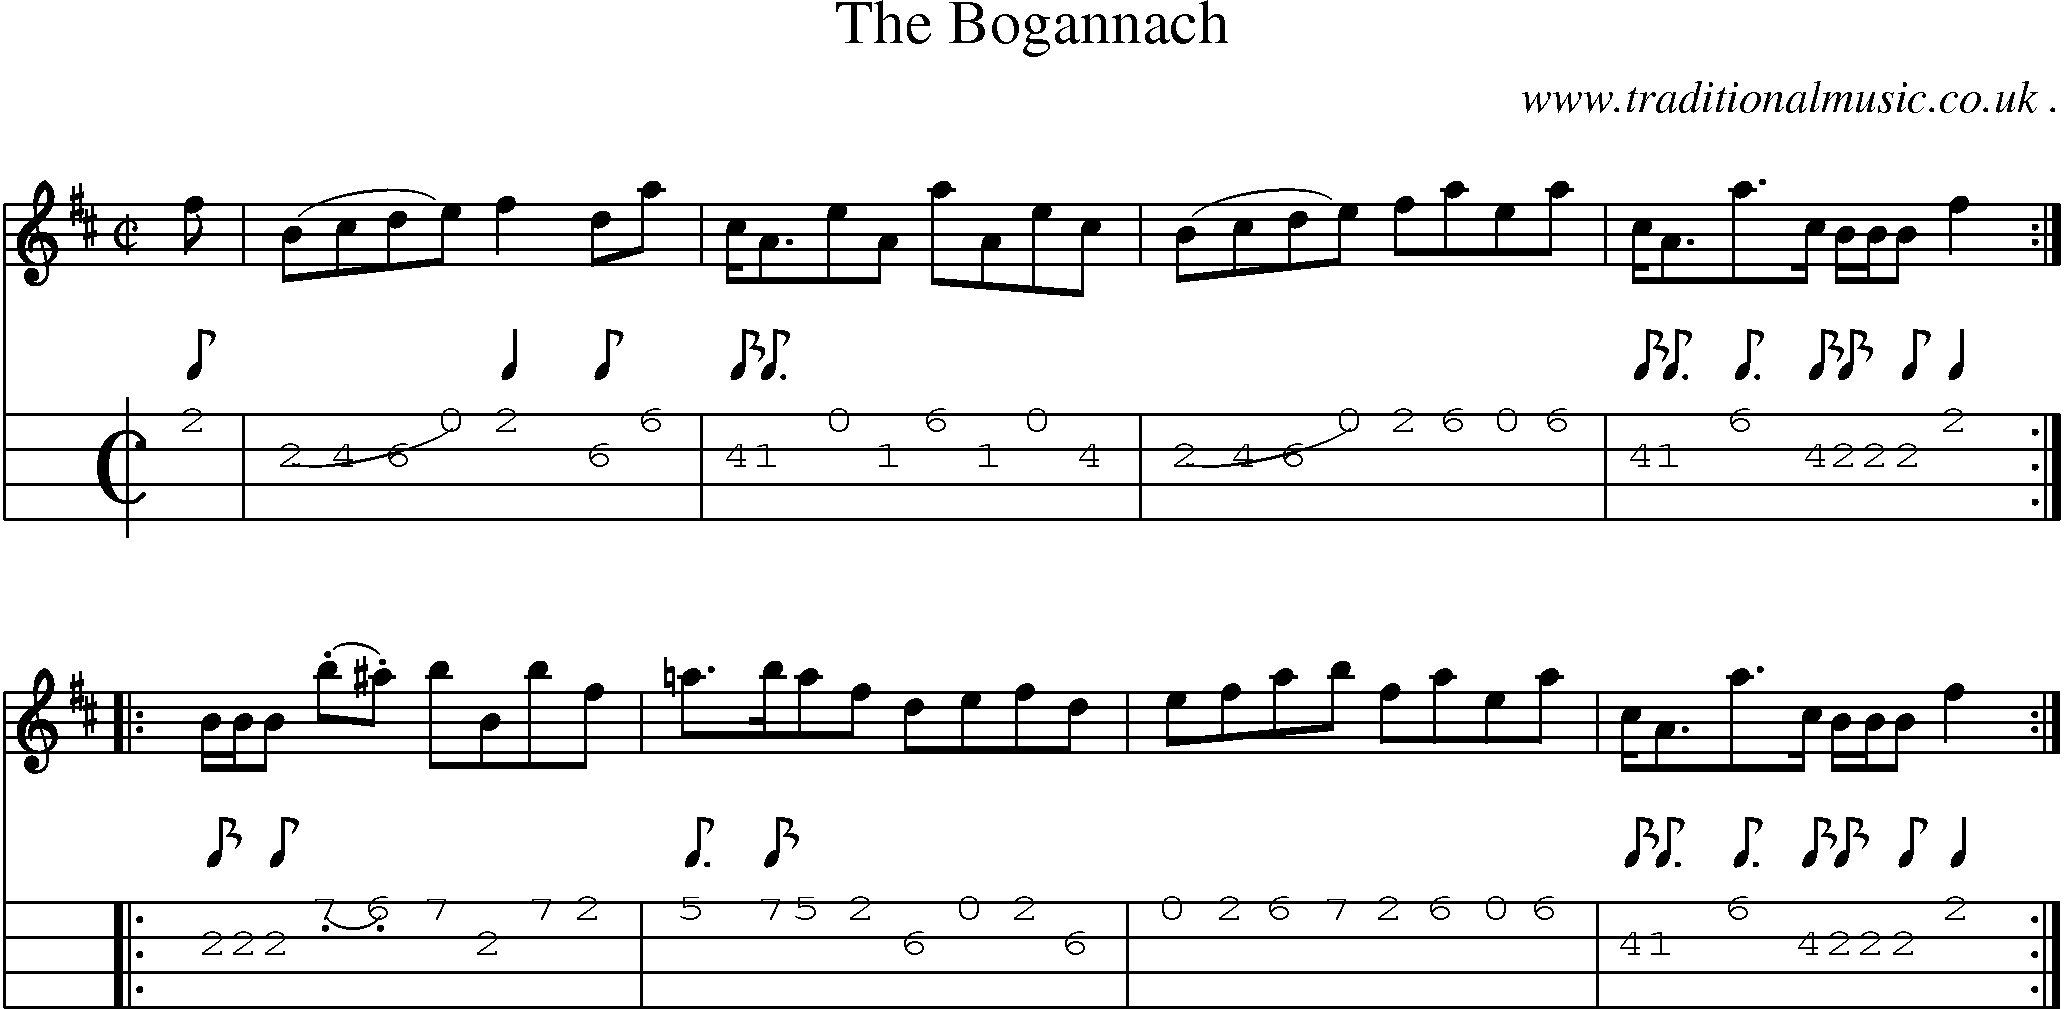 Sheet-music  score, Chords and Mandolin Tabs for The Bogannach